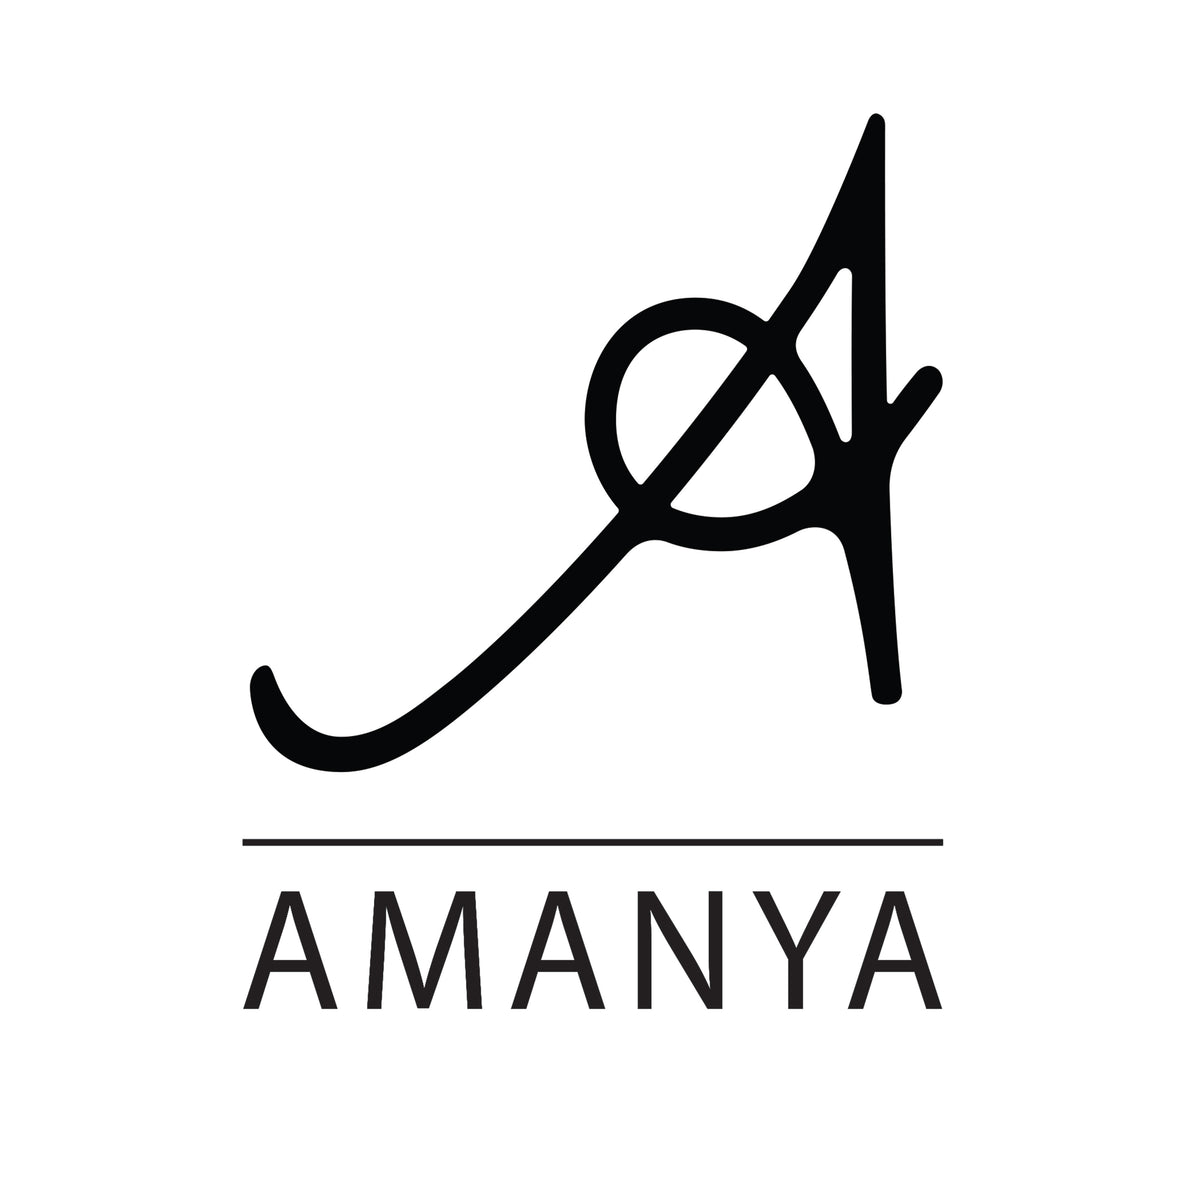 Amanya Design